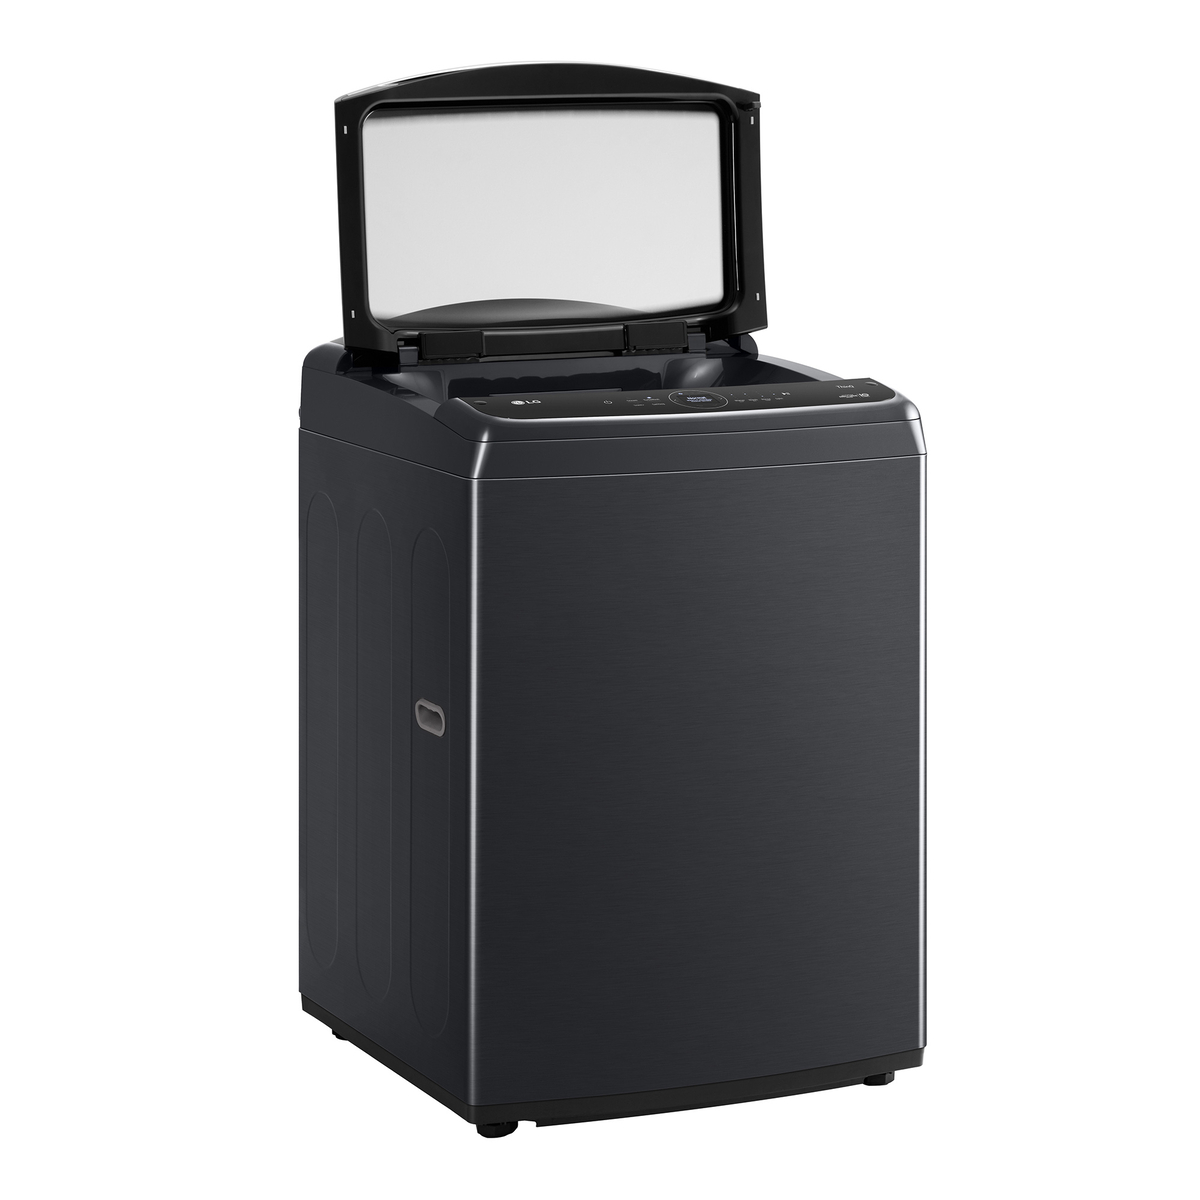 LG Top Load Washing Machine, 25 kg, Platinum Black, T25H9EFHTP.APBPMEA